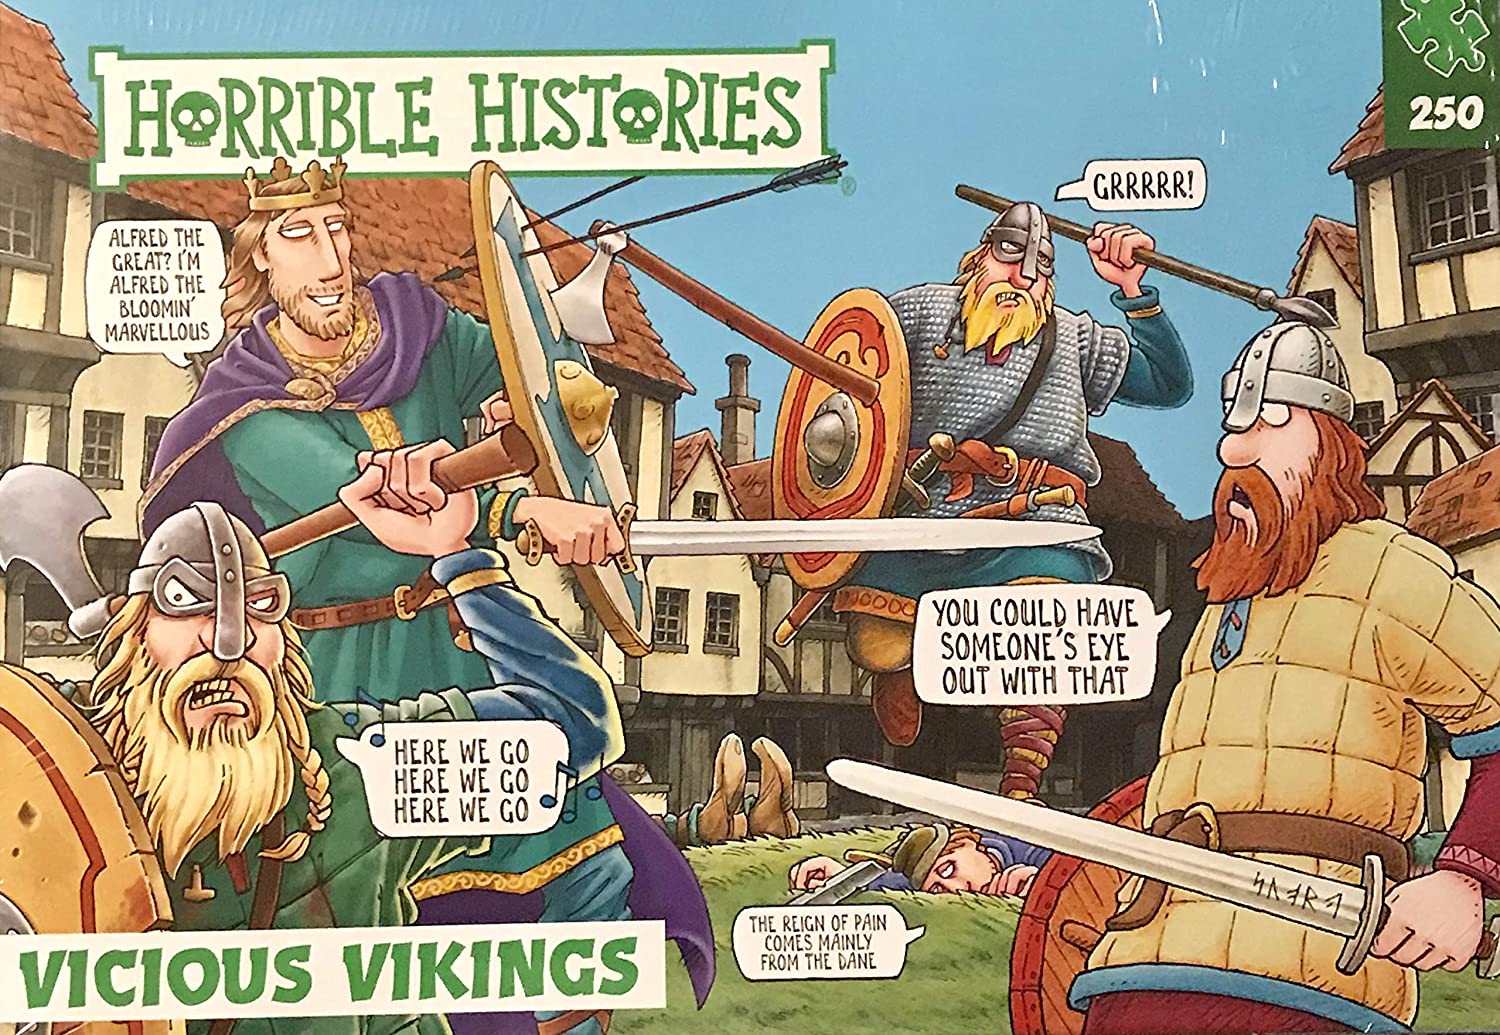 Vicious Vikings Puzzle